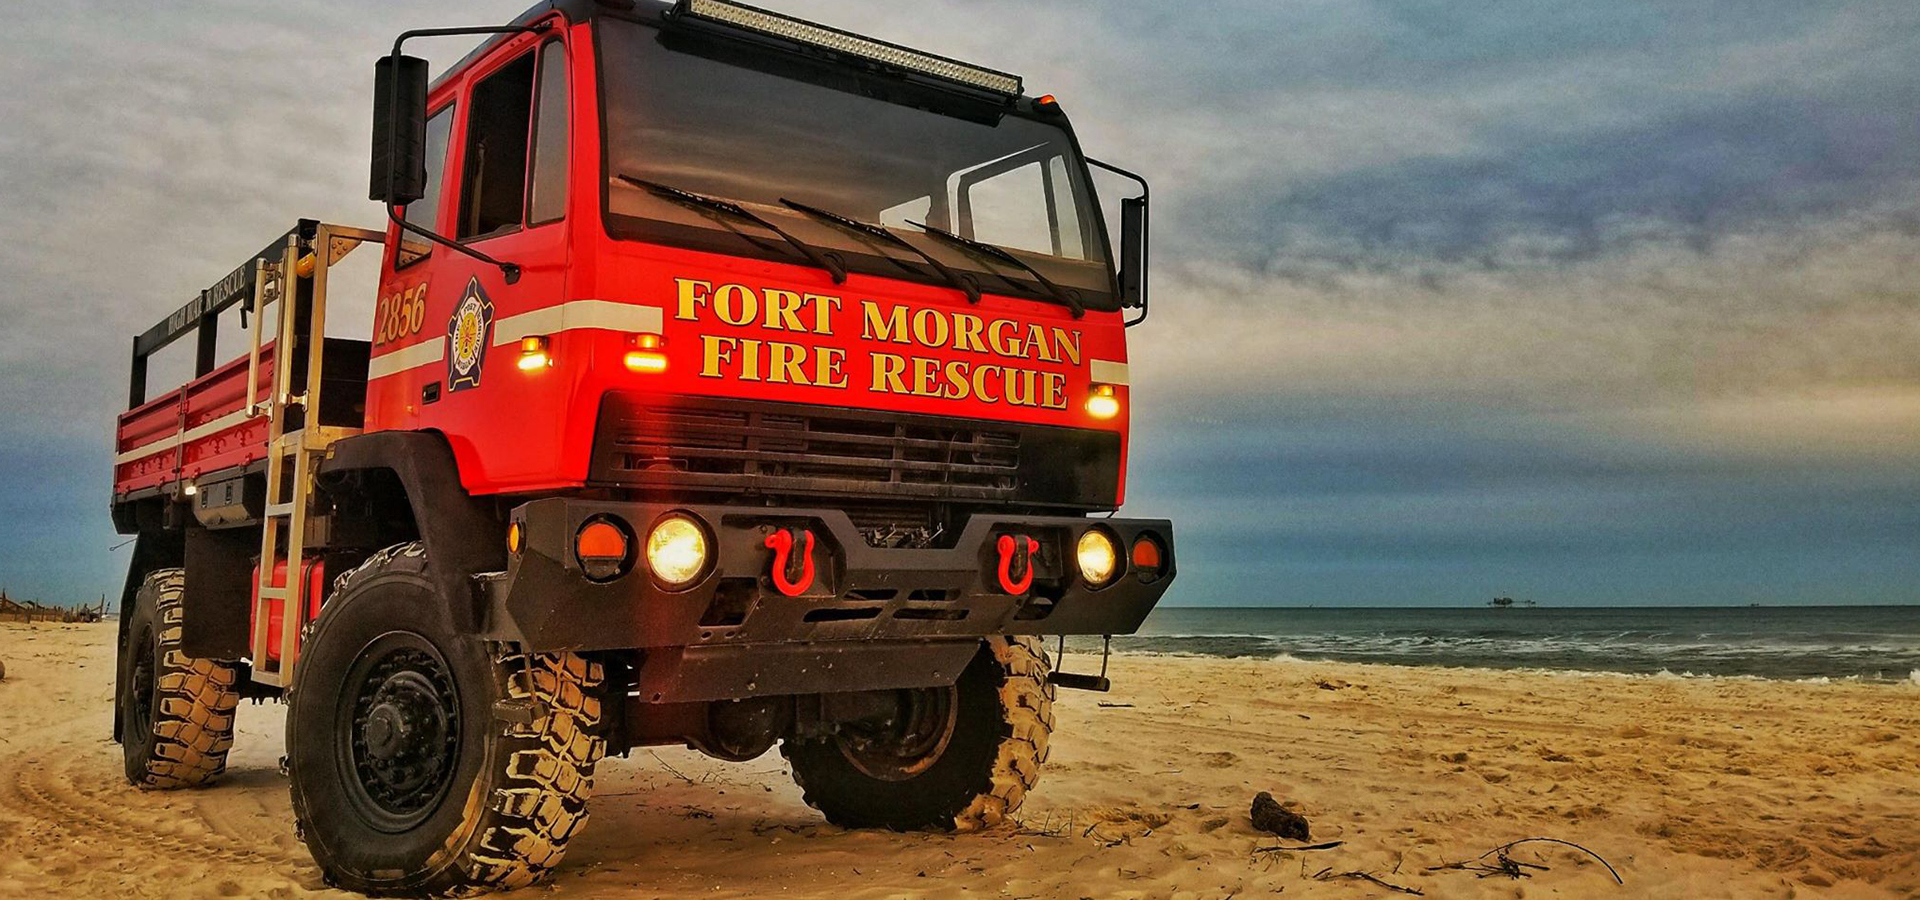 Fort Morgan Fire Rescue Truck